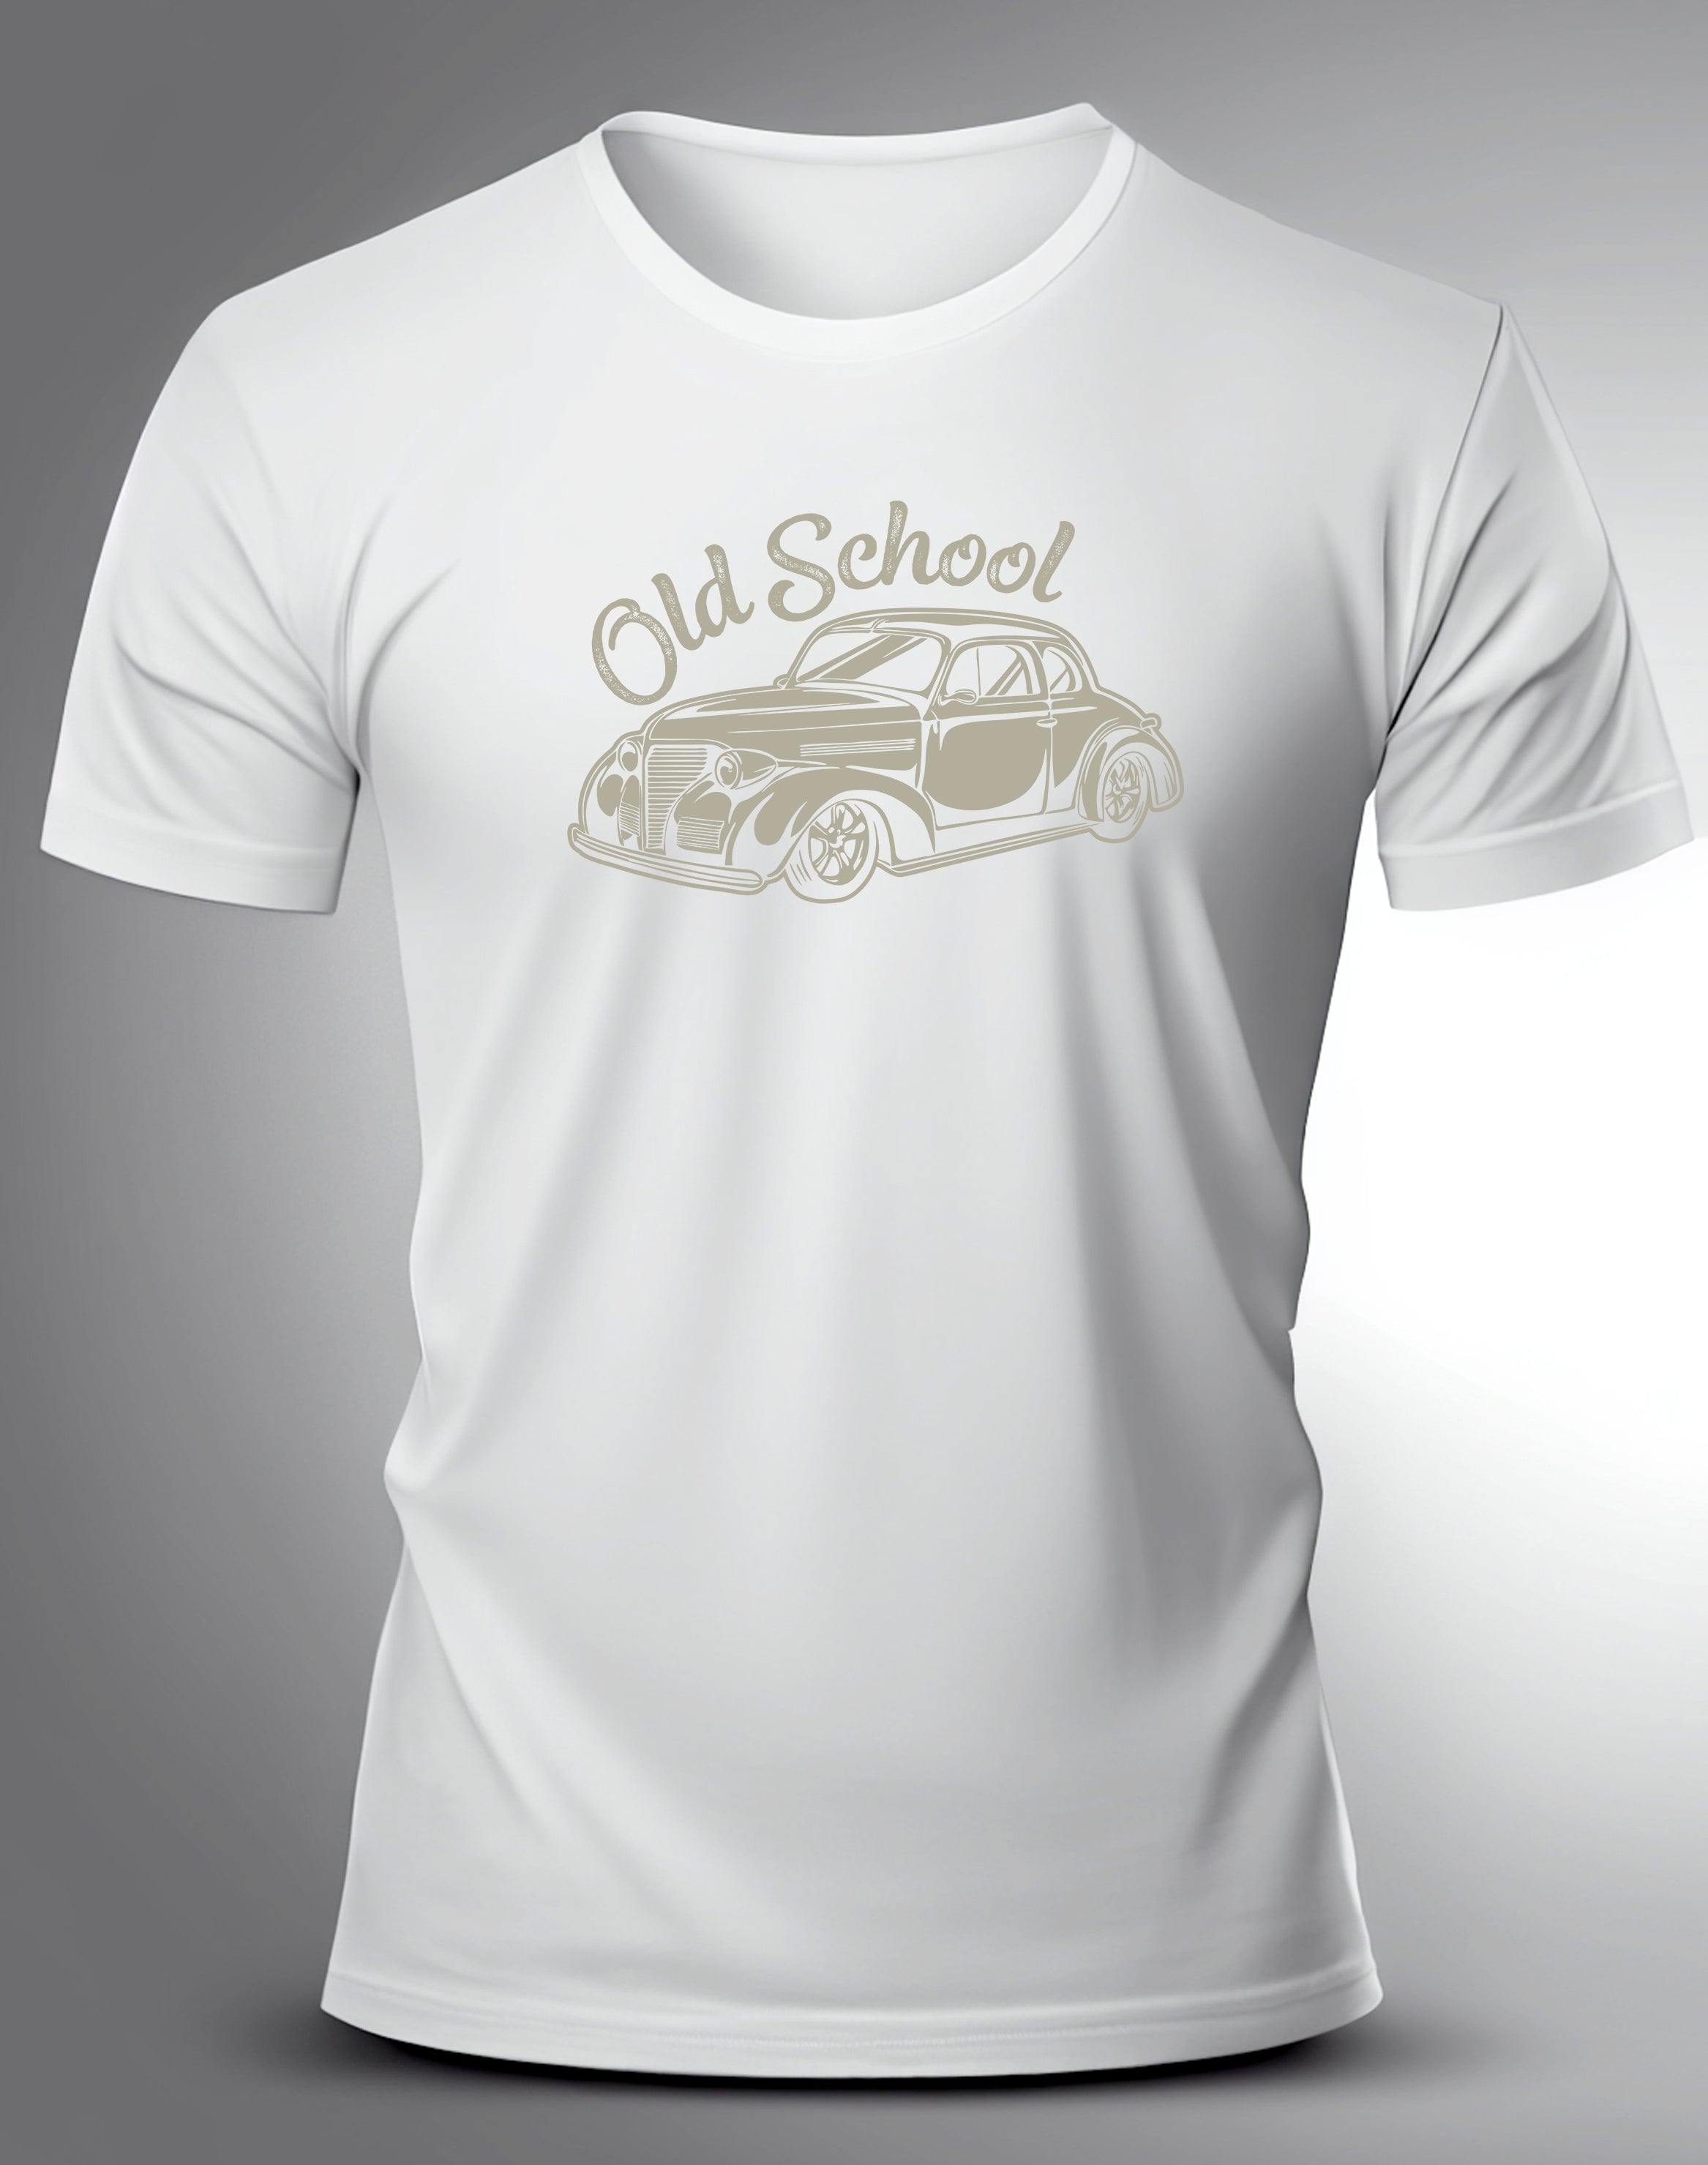 Old School Car T Shirt